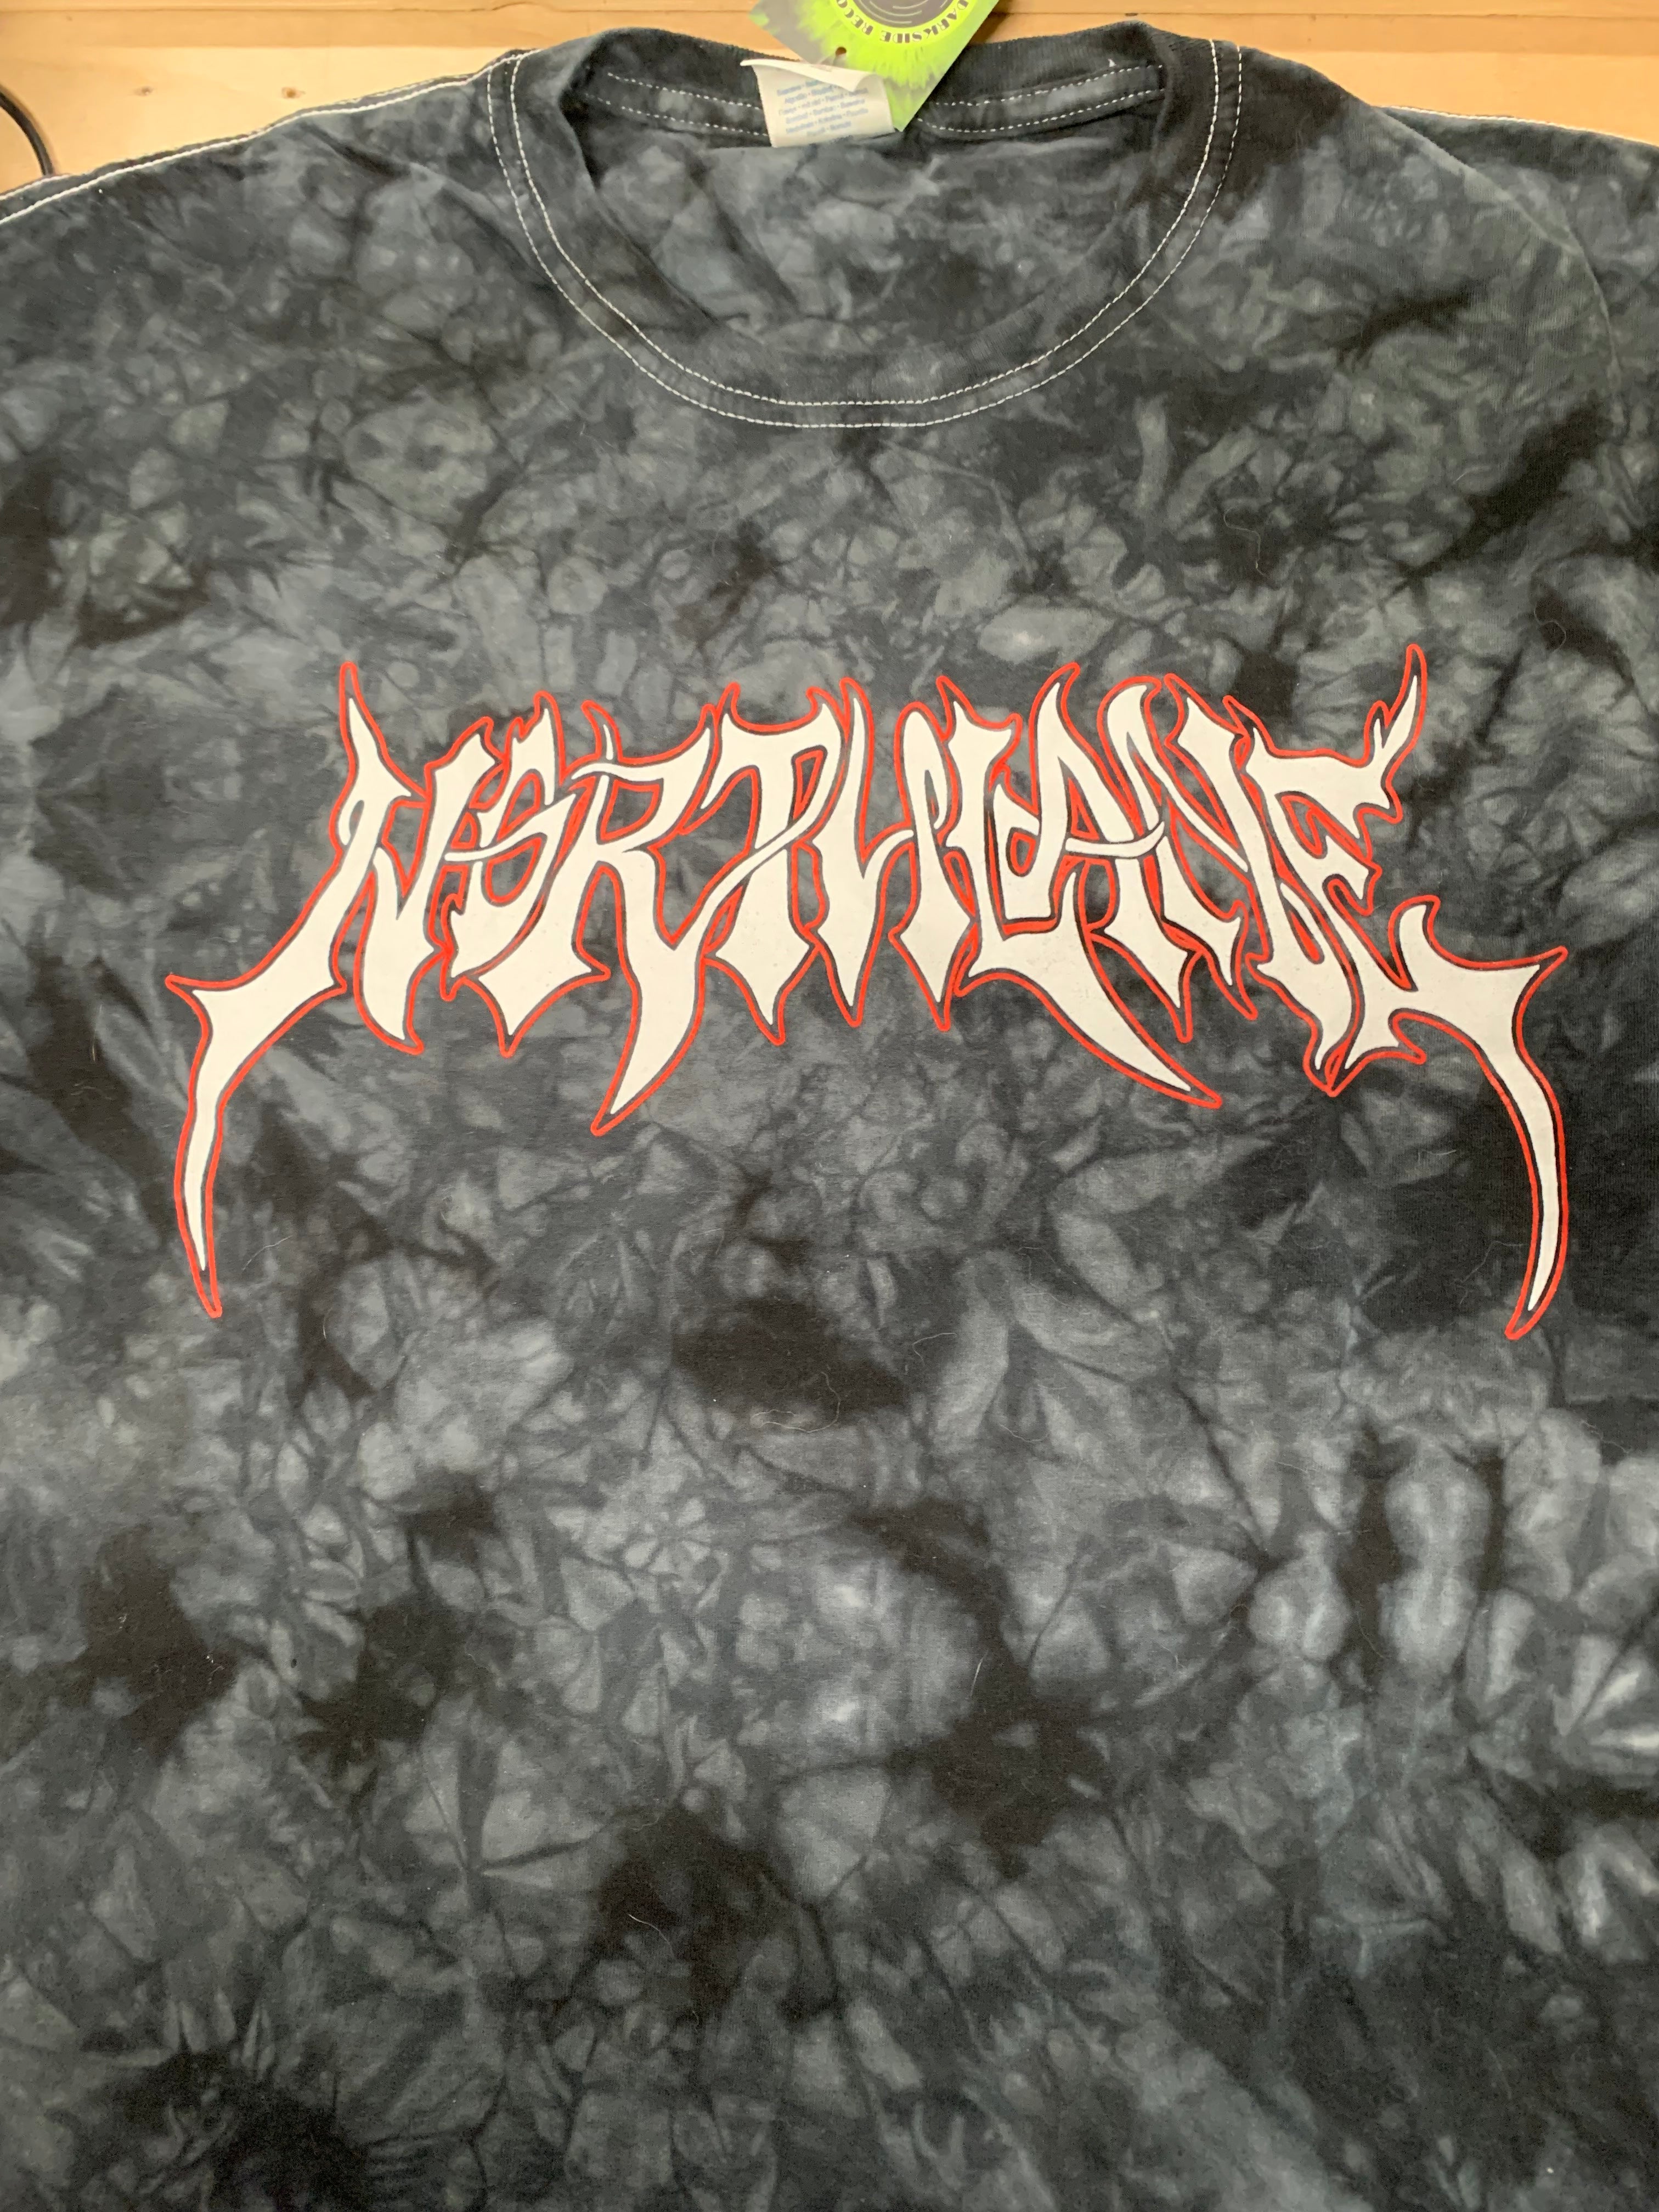 Northlane Metal Font Logo T-Shirt, Black / Grey, L